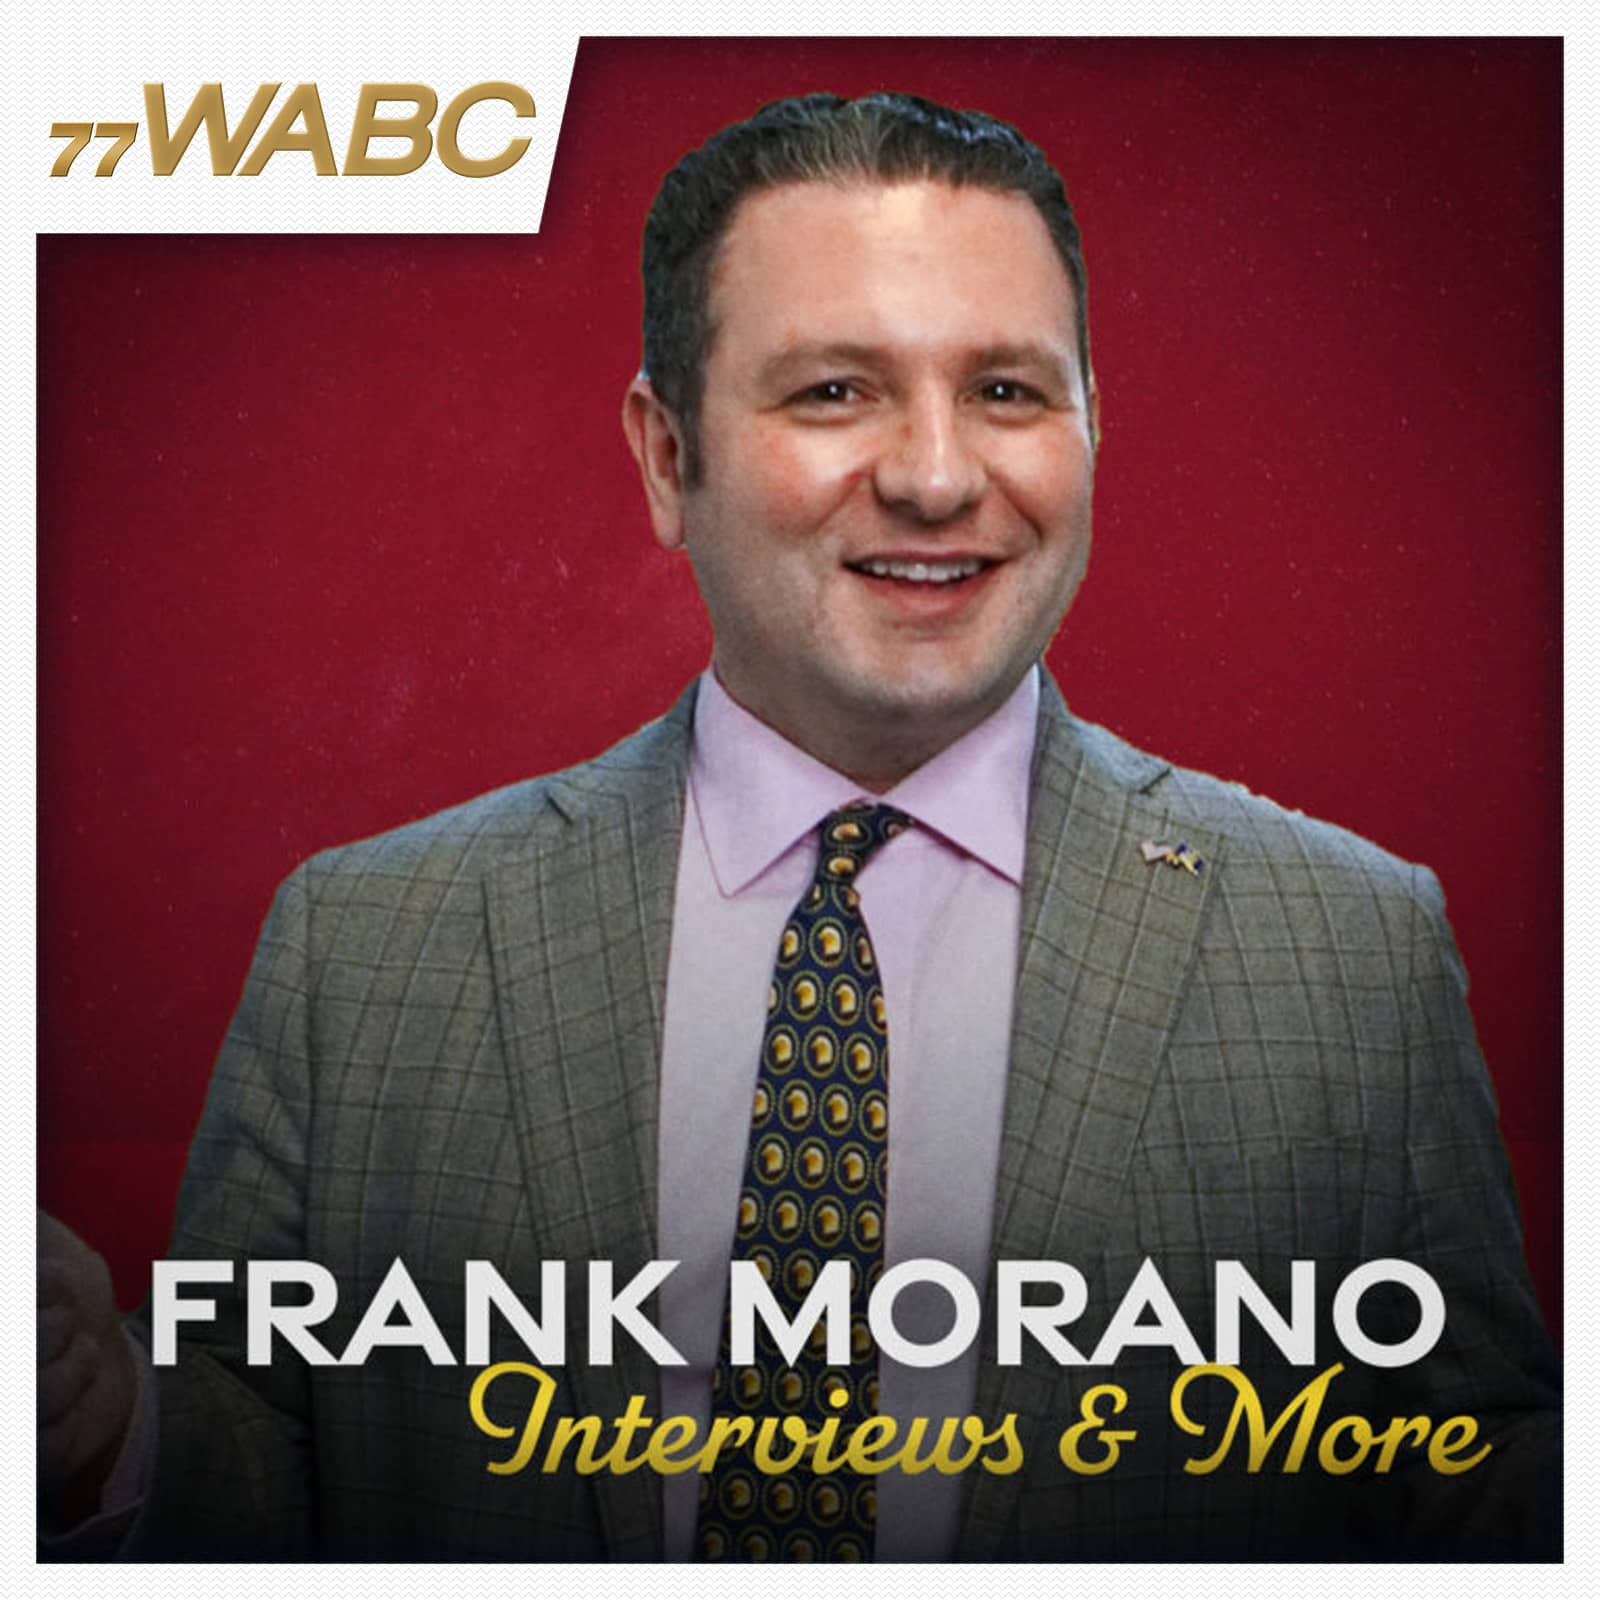 frank-morano-interviews-and-more-podcast-new-logo509357